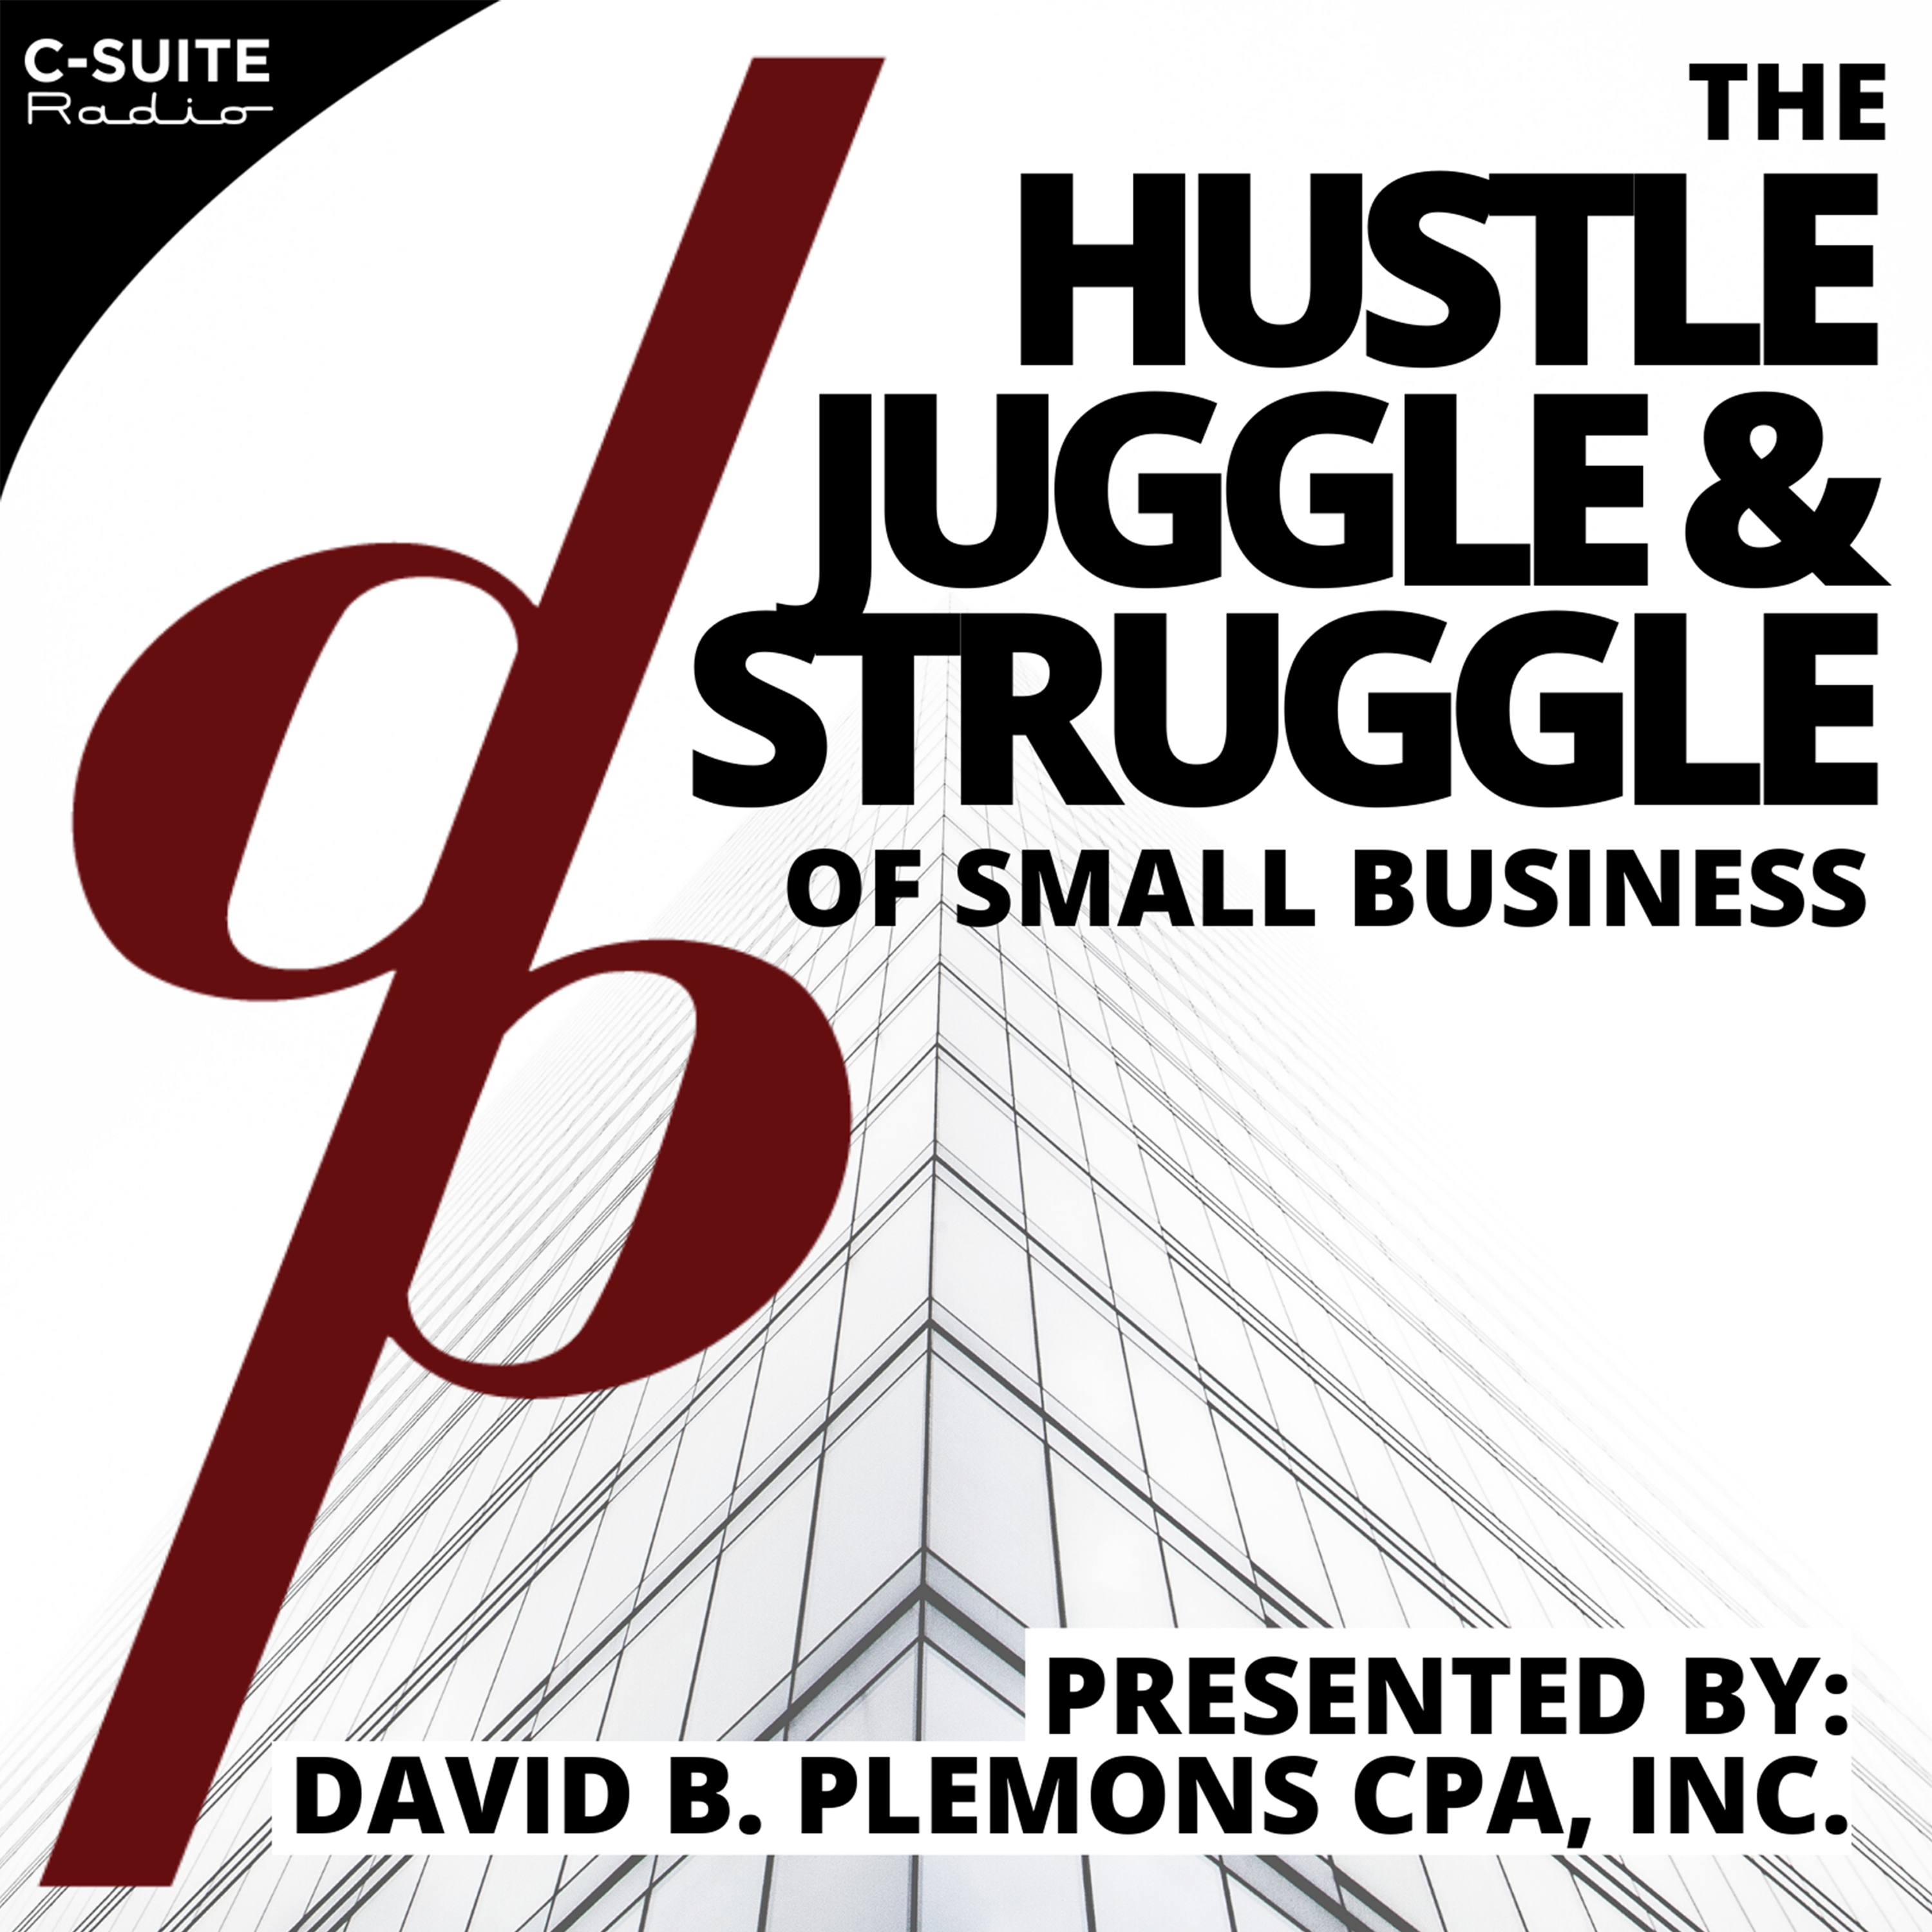 The Hustle, Juggle, and Struggle of Small BusinessThe Hustle, Juggle, and Struggle of Small Business